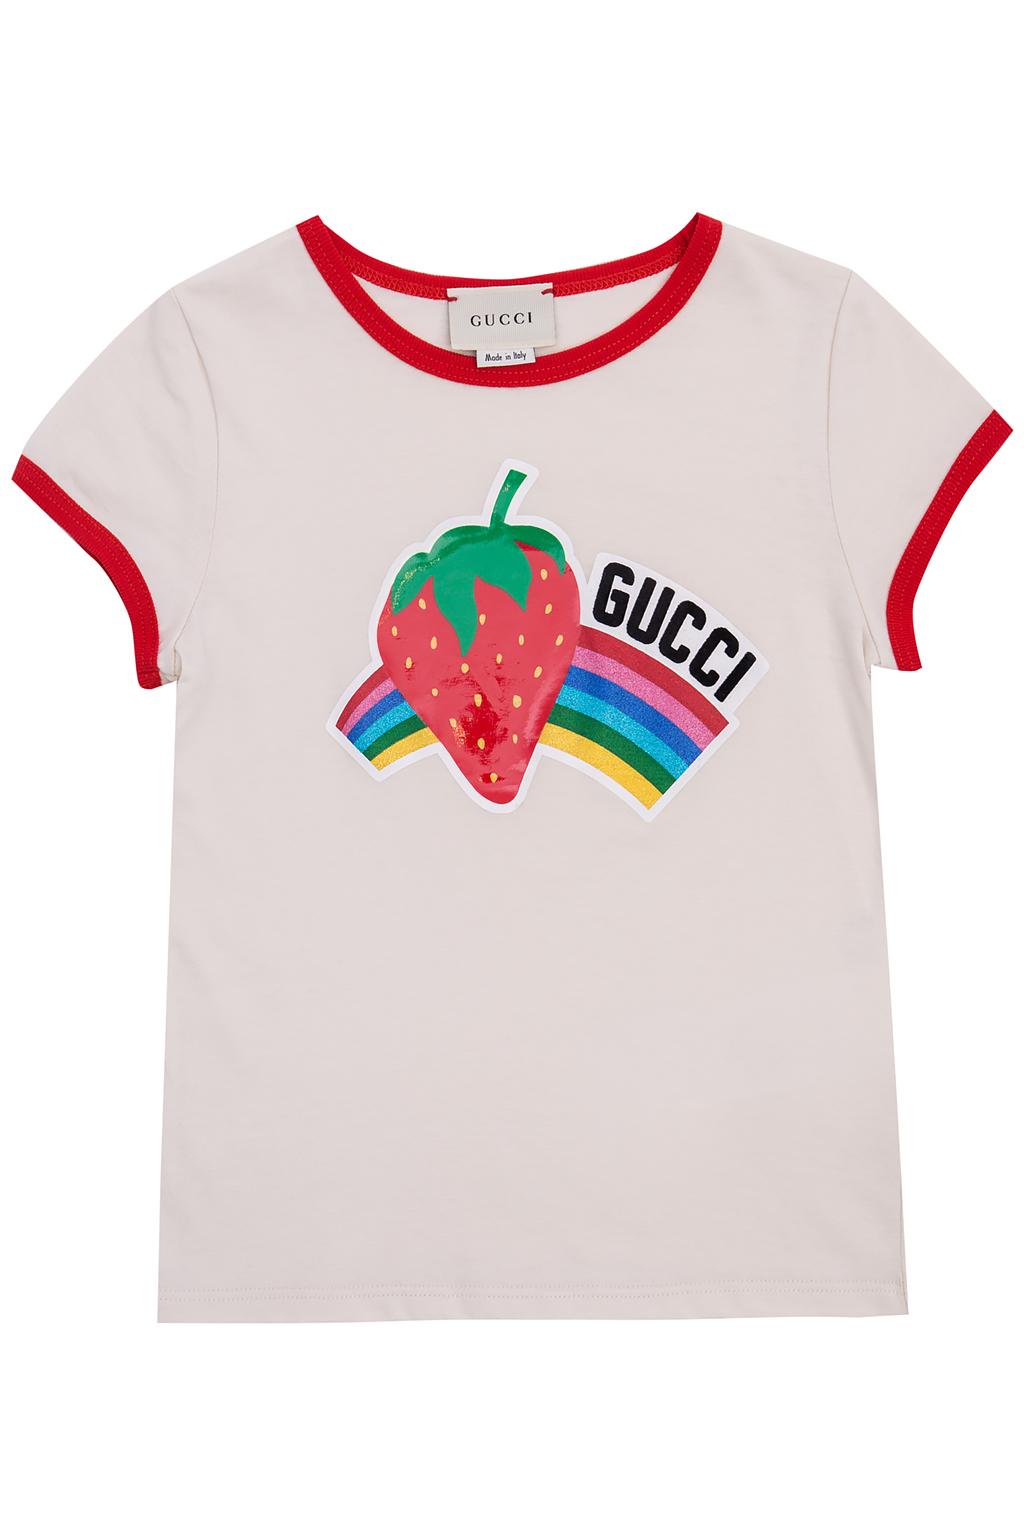 gucci strawberry t shirt